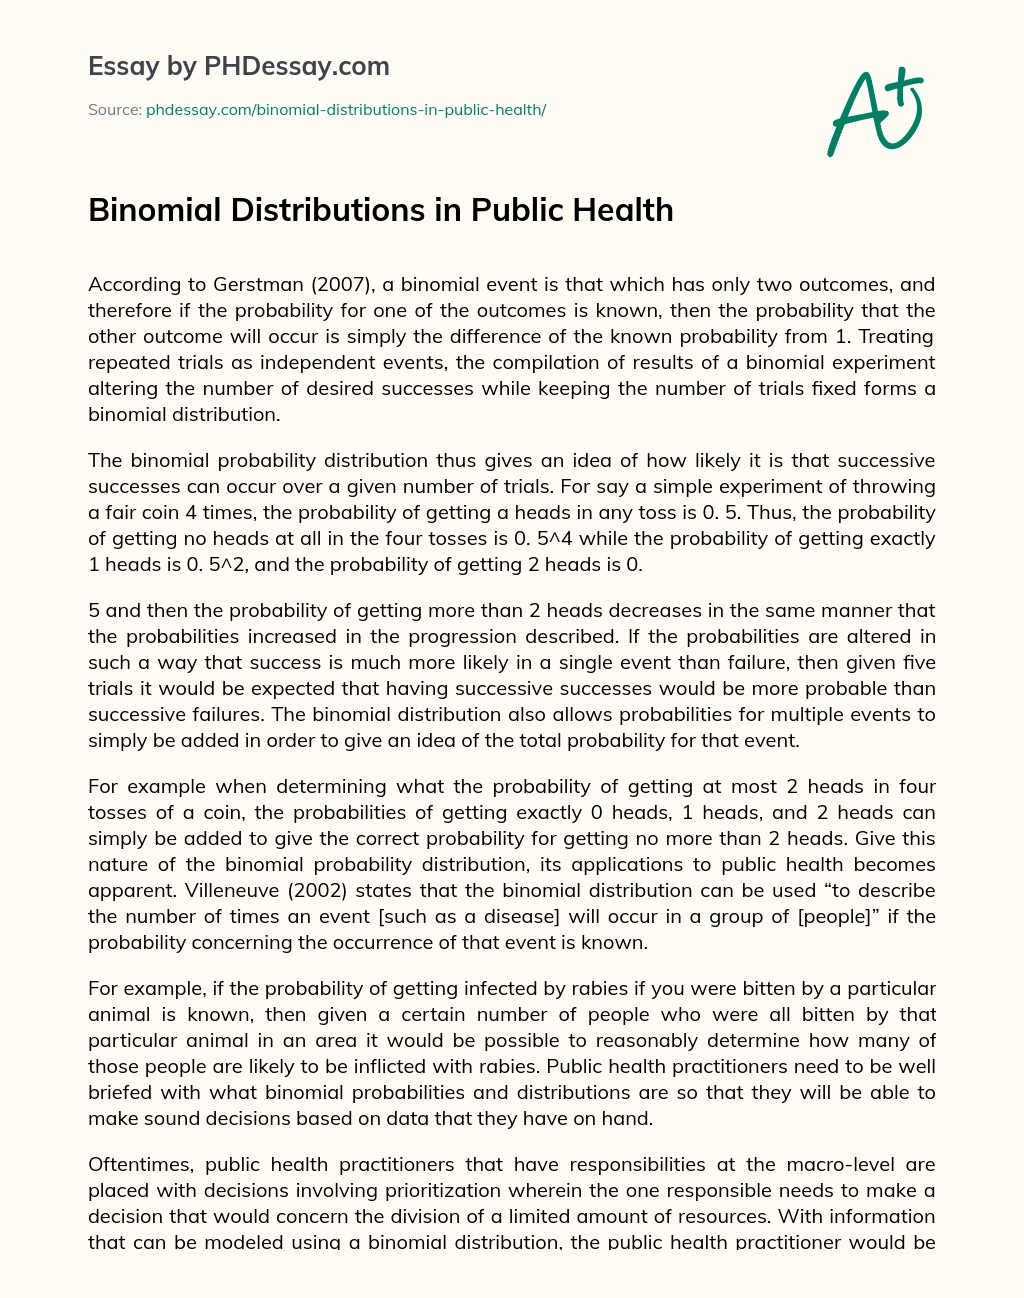 Binomial Distributions in Public Health essay